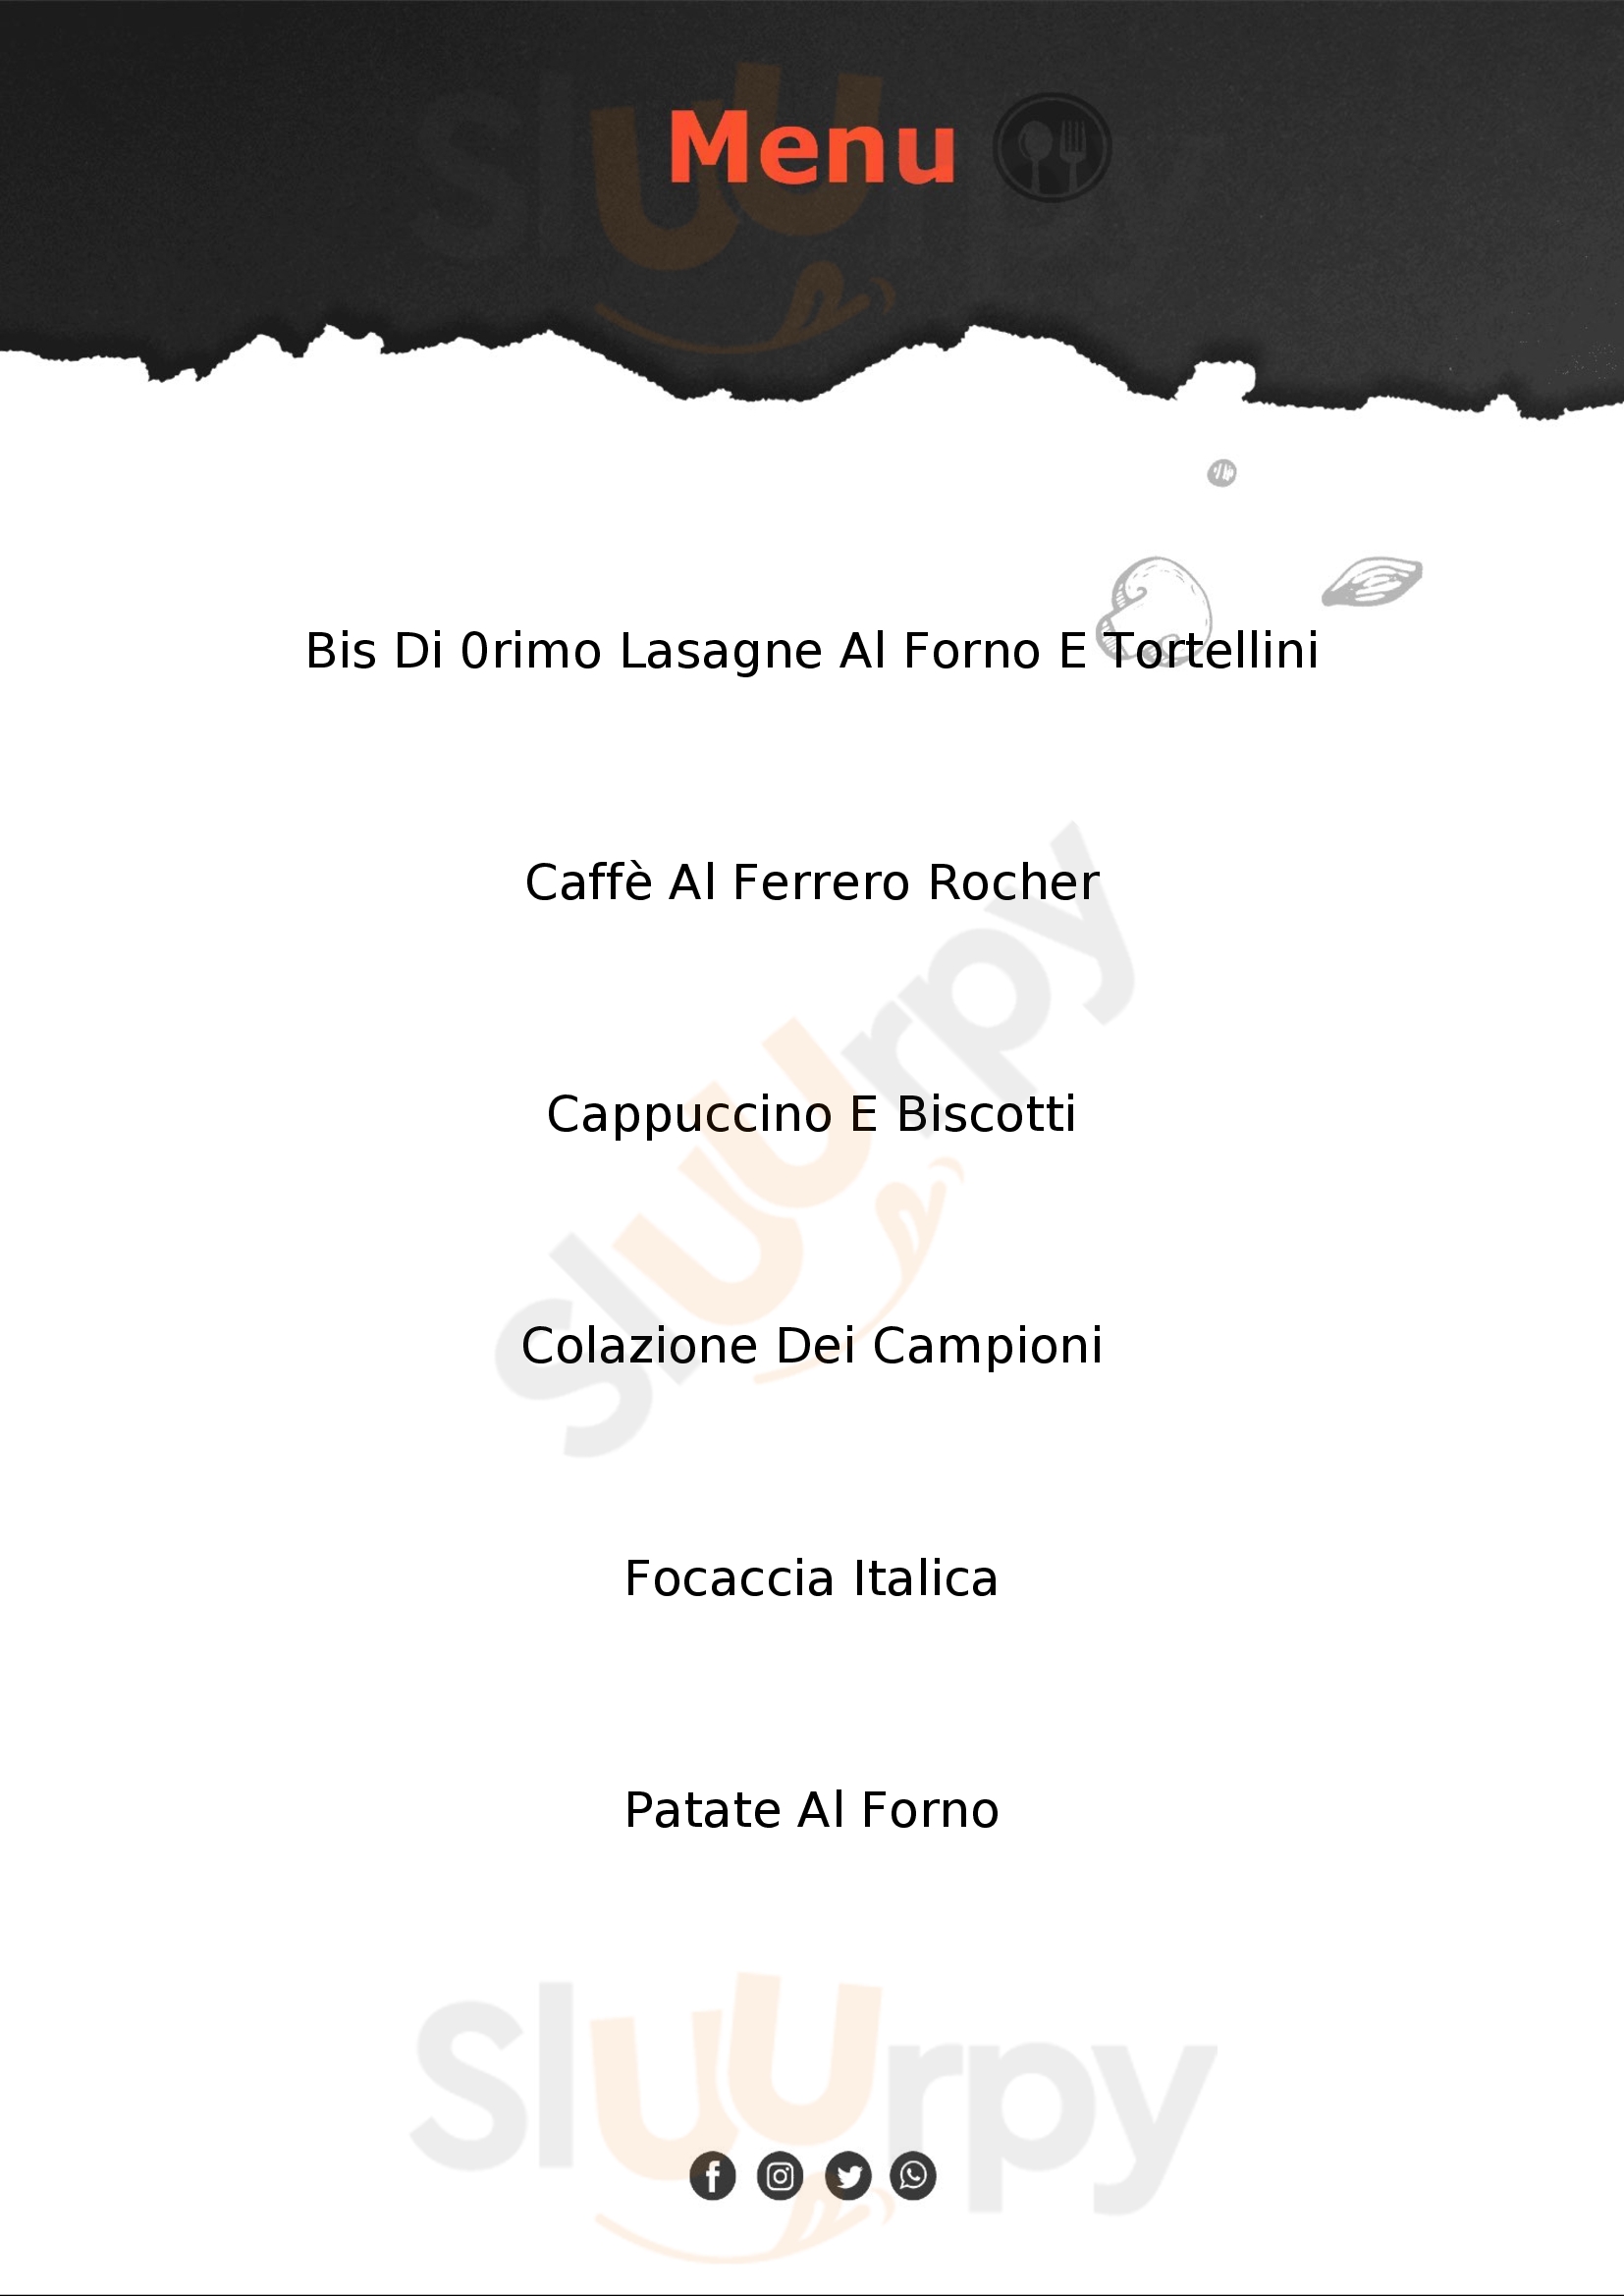 My Chef - La Pioppa Ovest Zola Predosa menù 1 pagina